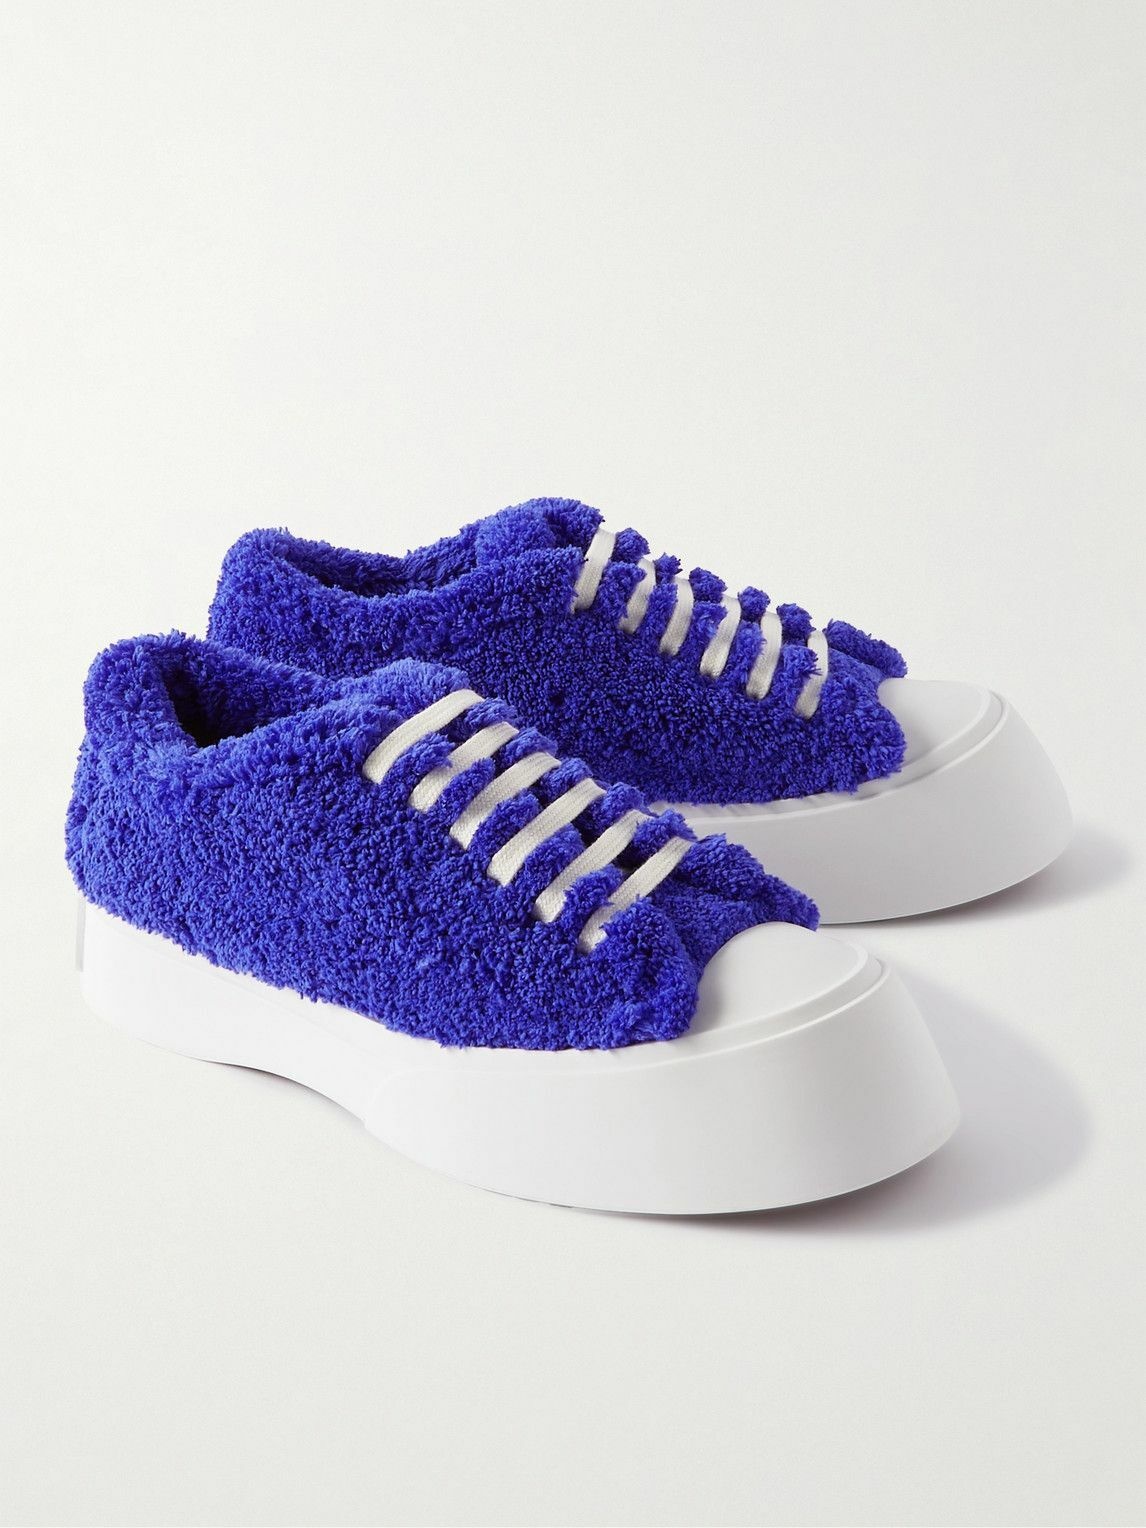 Marni - Pablo Terry Sneakers - Blue Marni